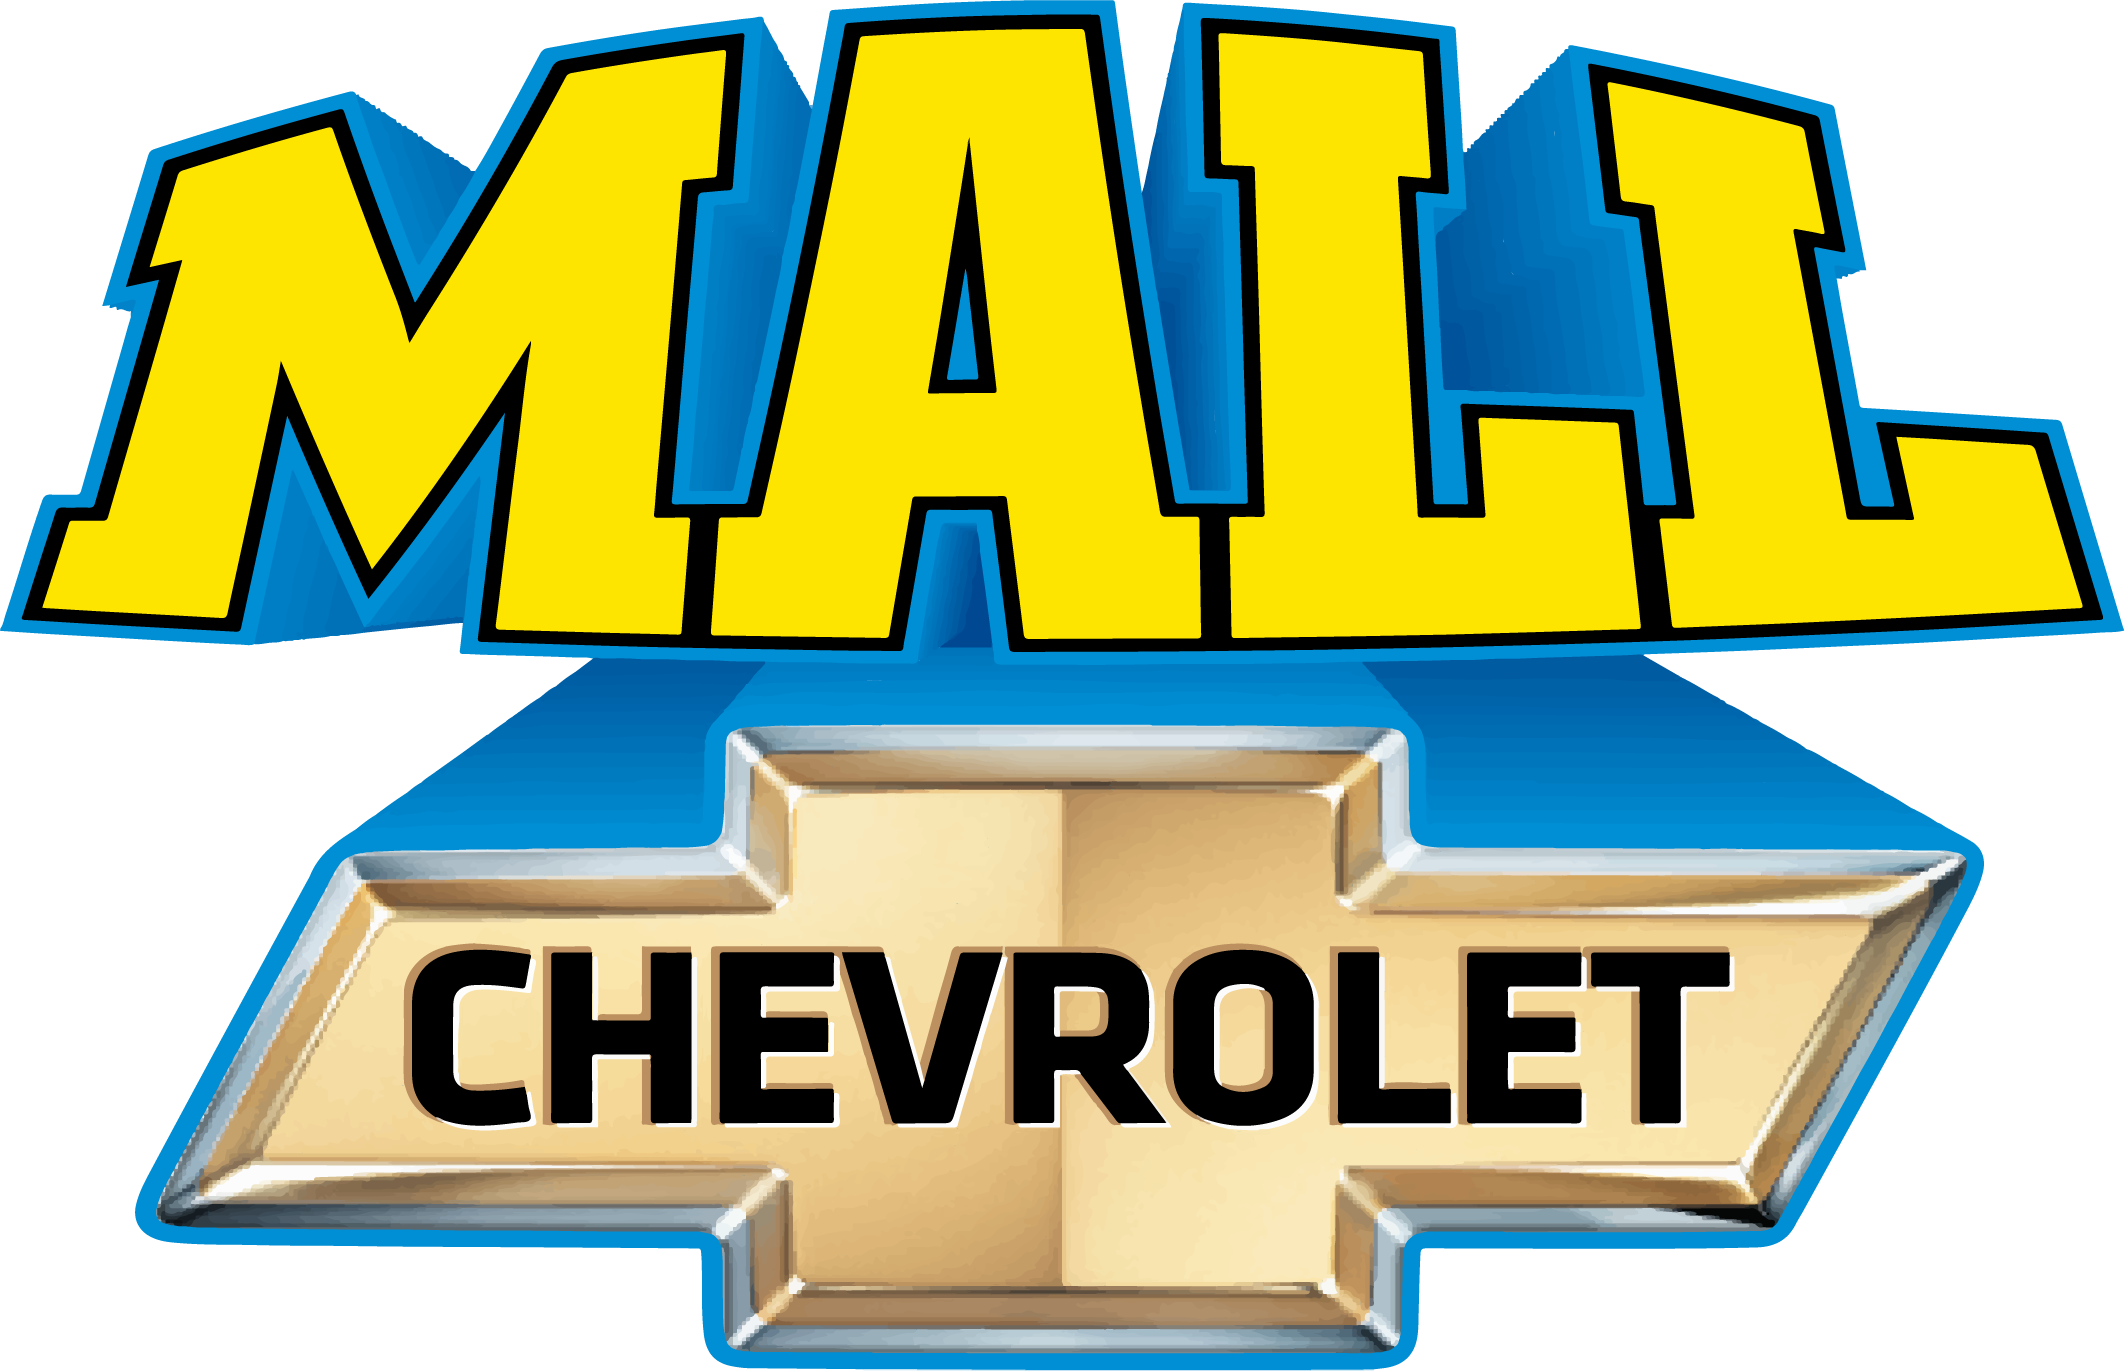 Mall Chevrolet